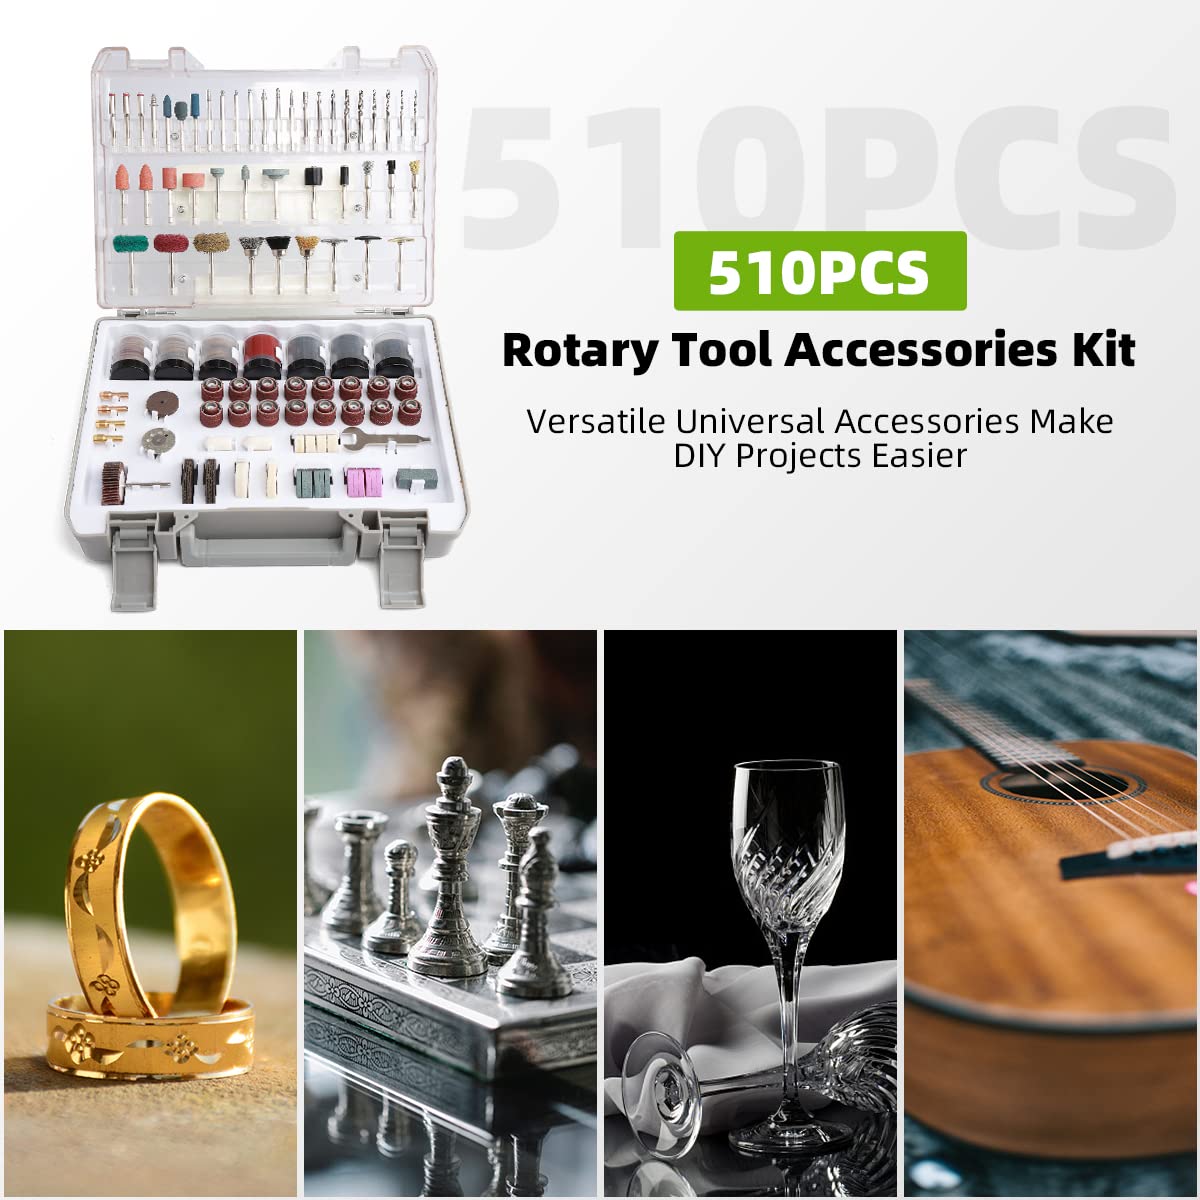 HUEPAR RT510 - Rotary Tool Accessories Kit HUEPAR EU - Laser Level